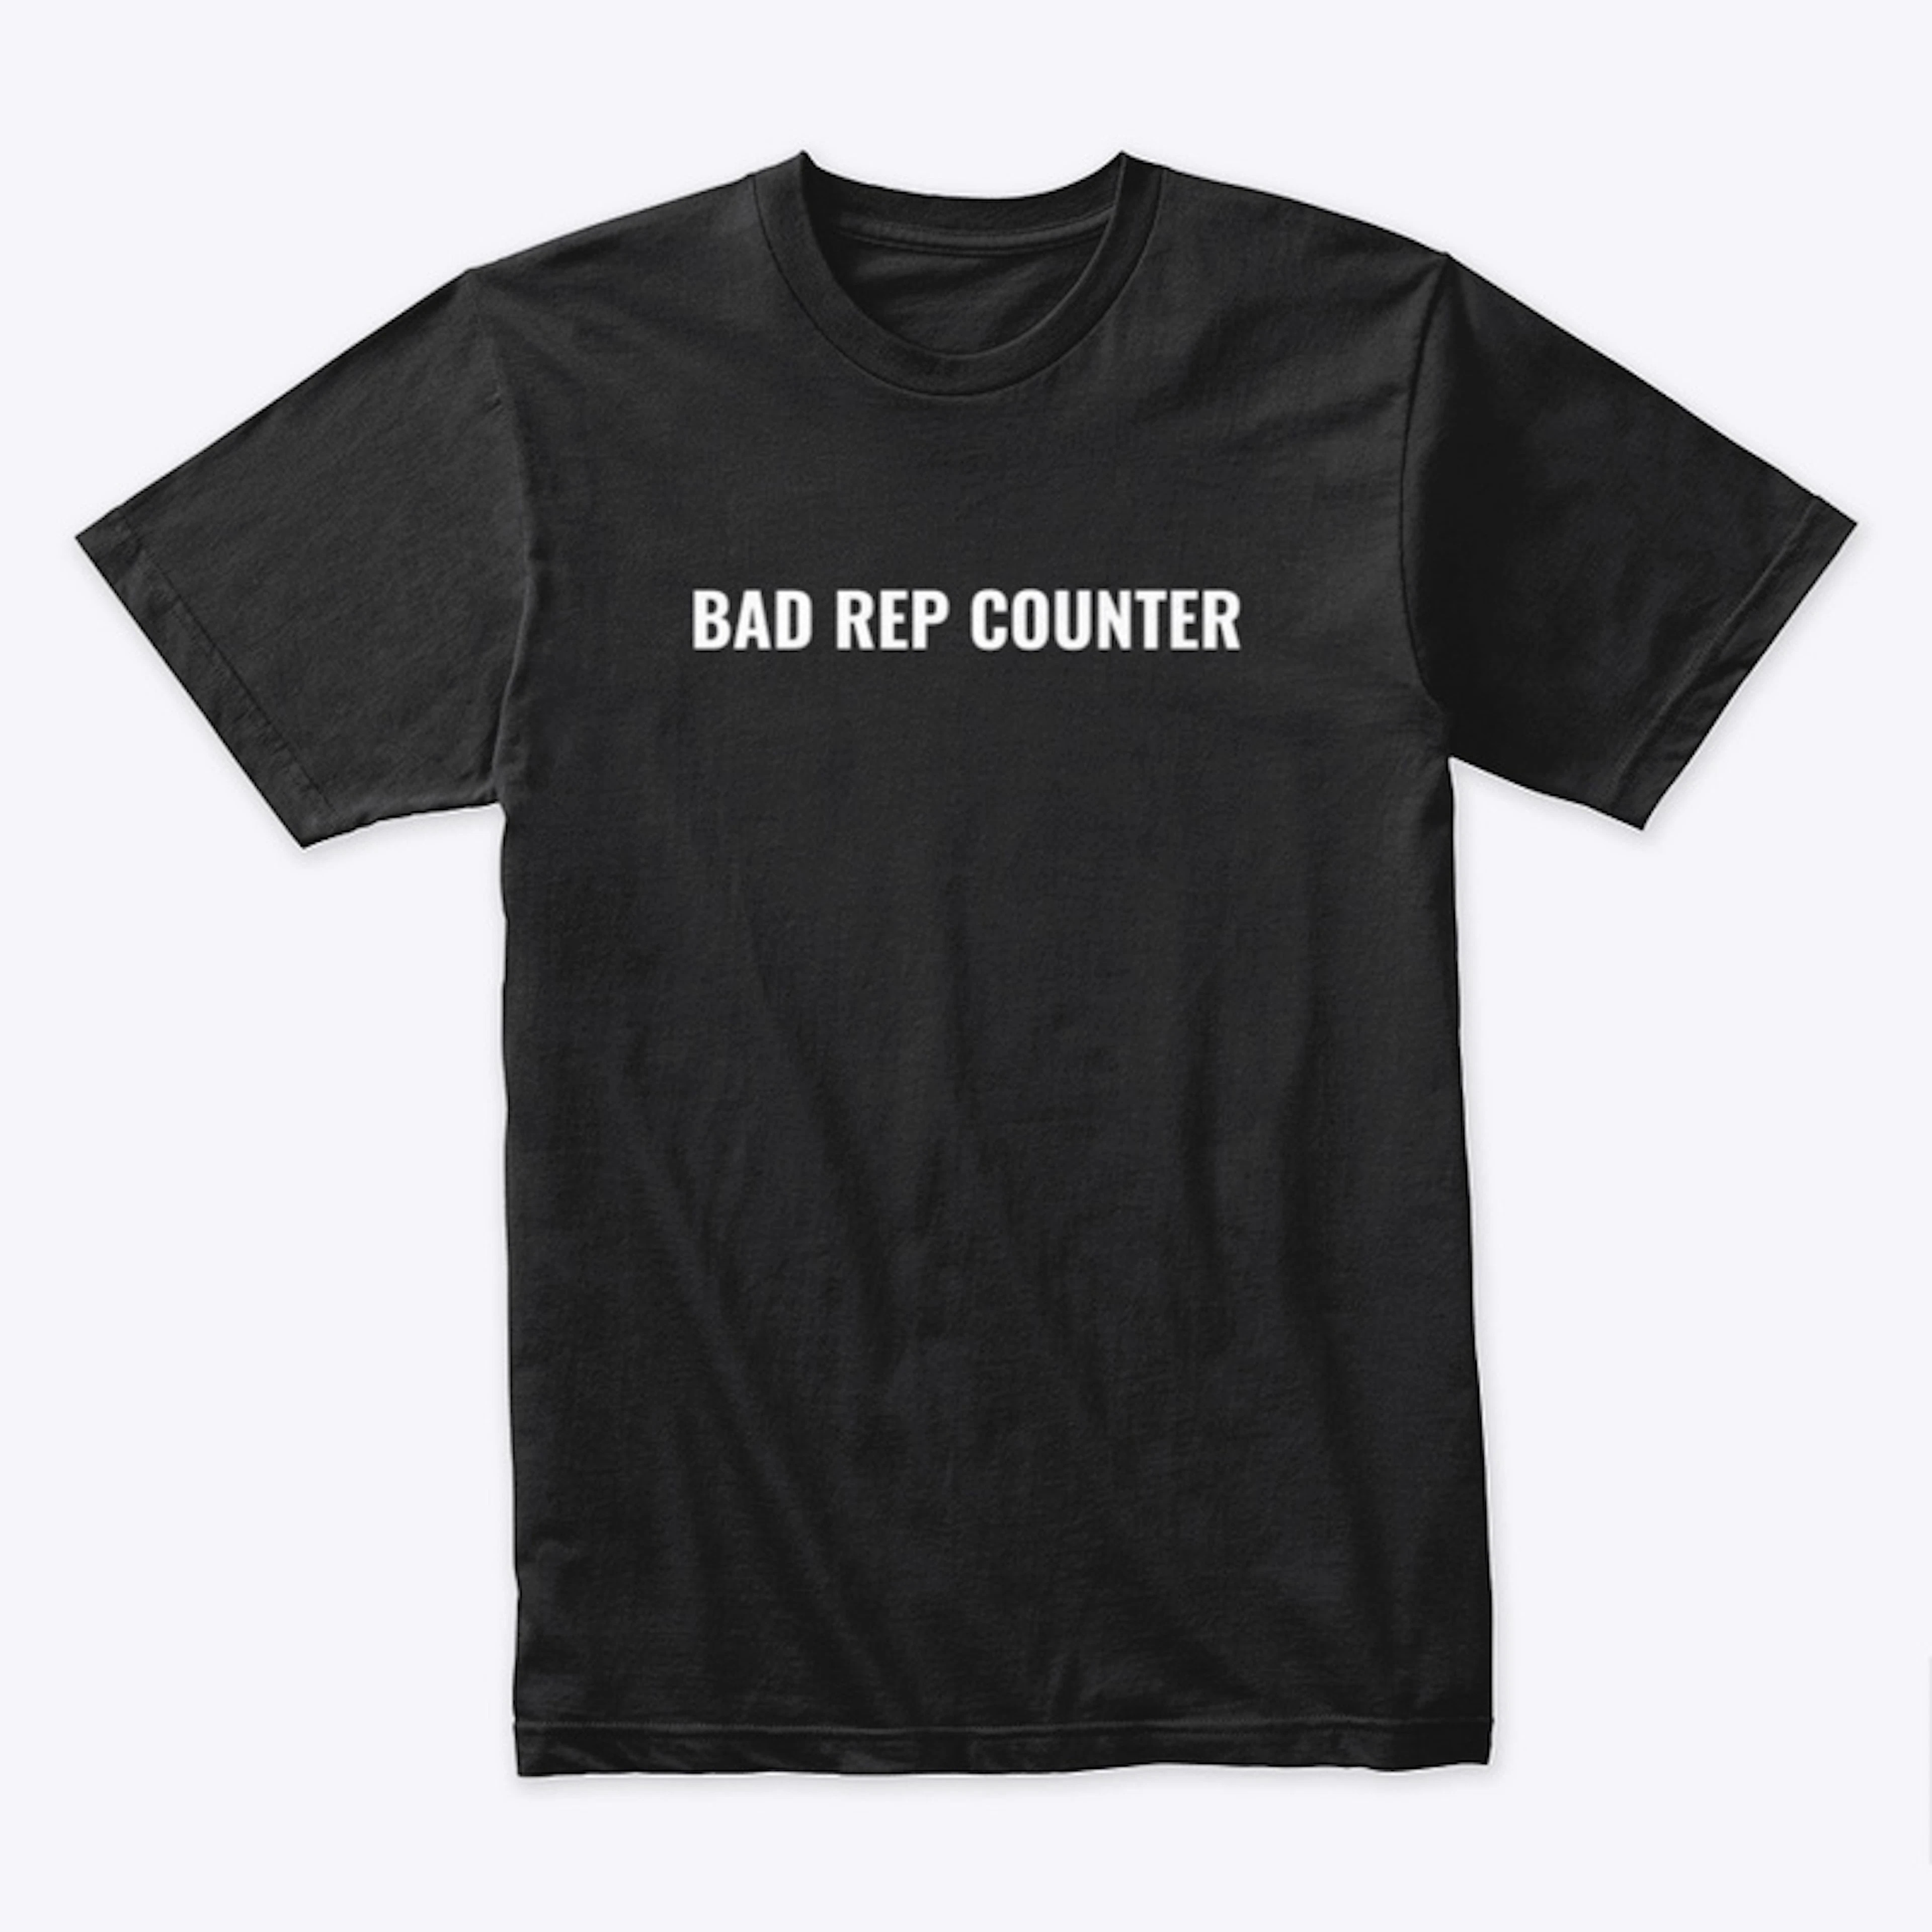 Bad Rep Counter